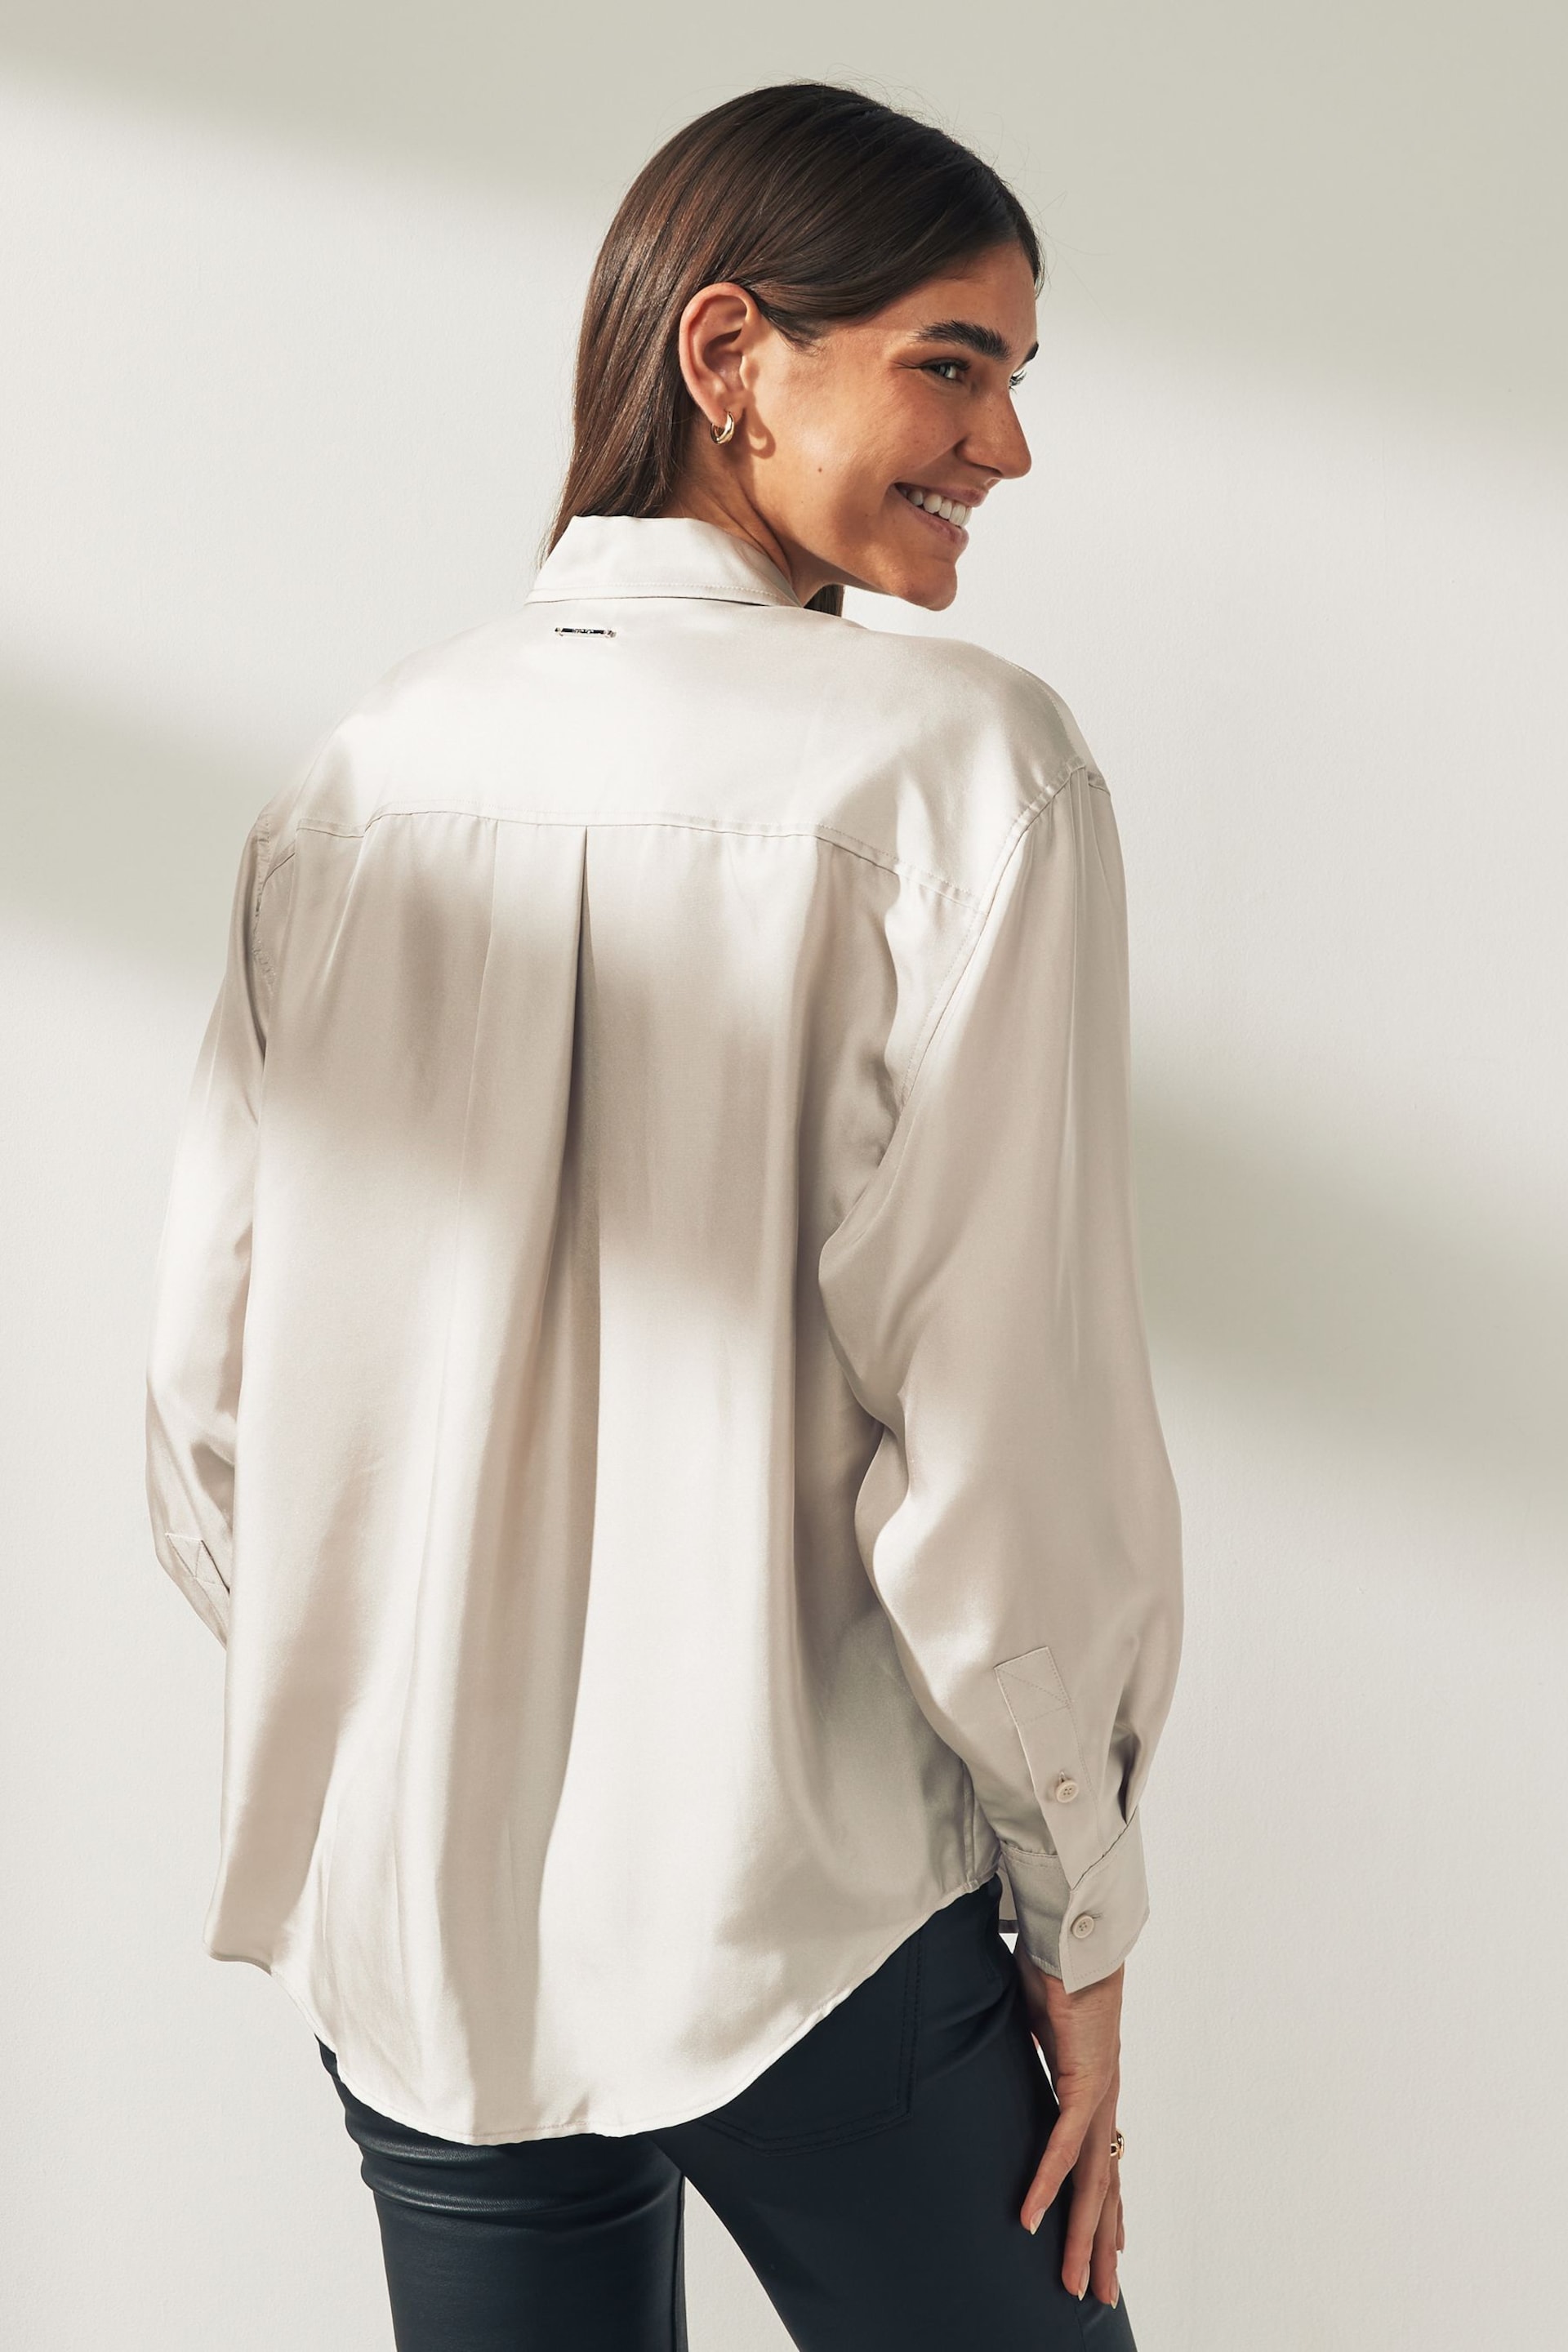 Calvin Klein Grey Silk Relaxed Shirt - Image 2 of 5